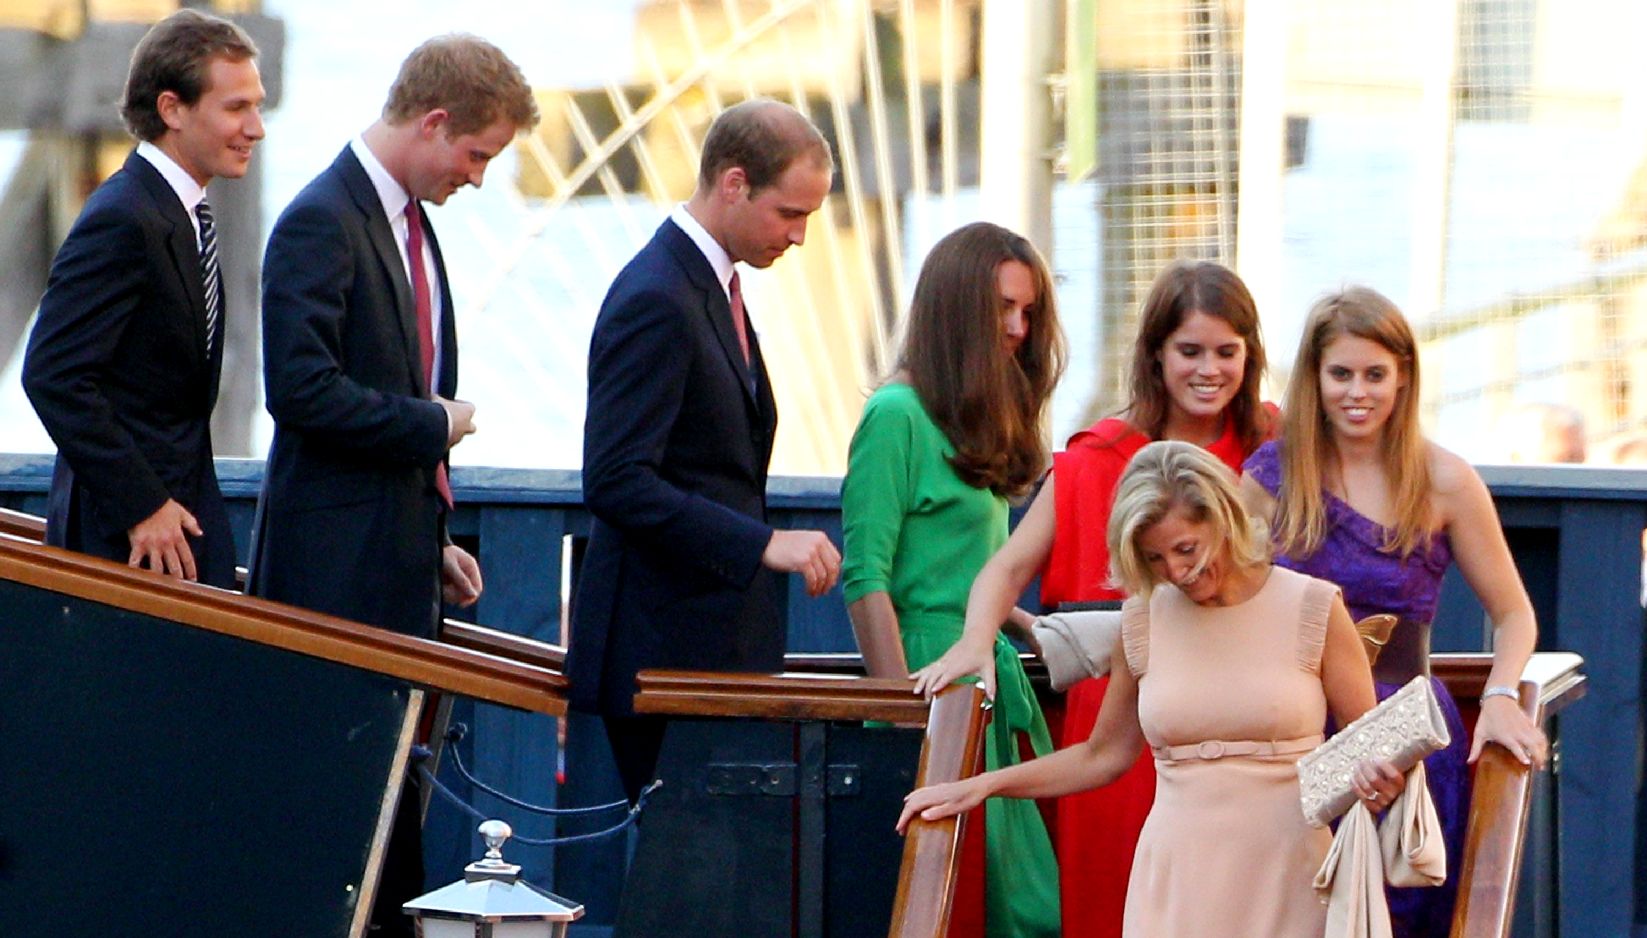 Weddings aboard the royal yacht britannia